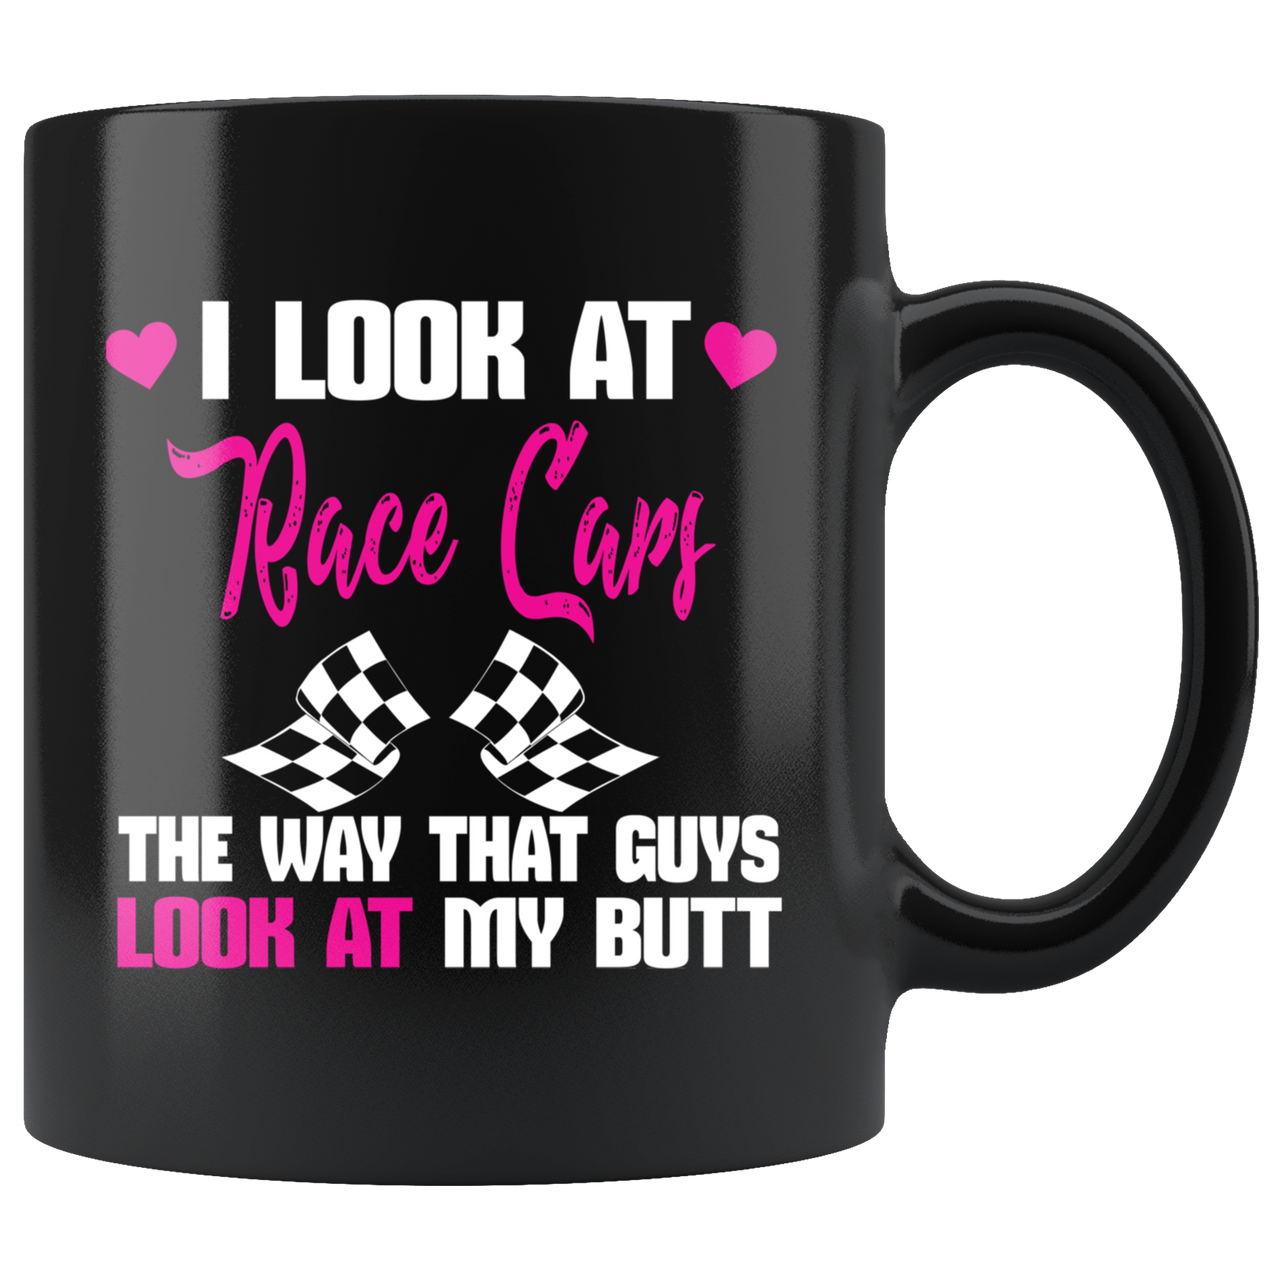 I Look At Race Cars The Way That Guys Look At My Butt Mug!